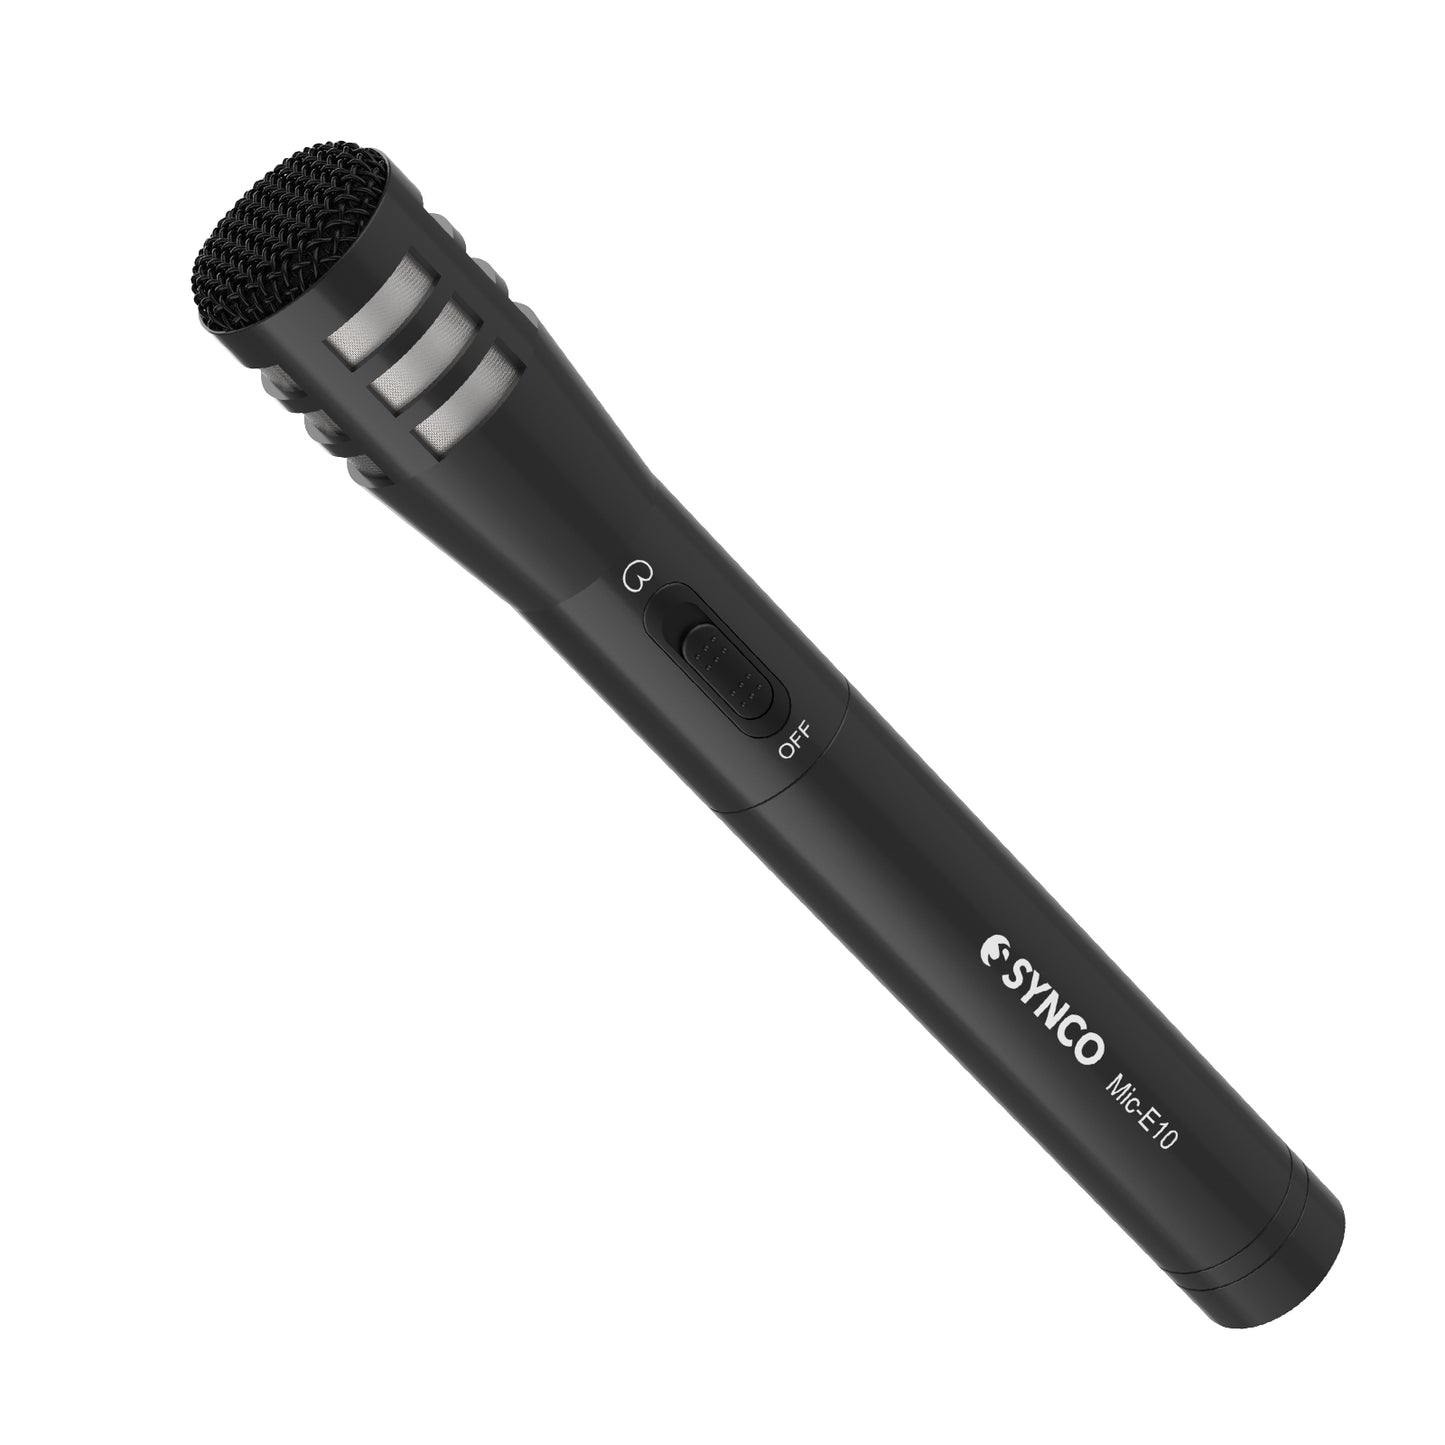 SYNCO Mic-E10 Vocal Shotgun Microphone For Streamer